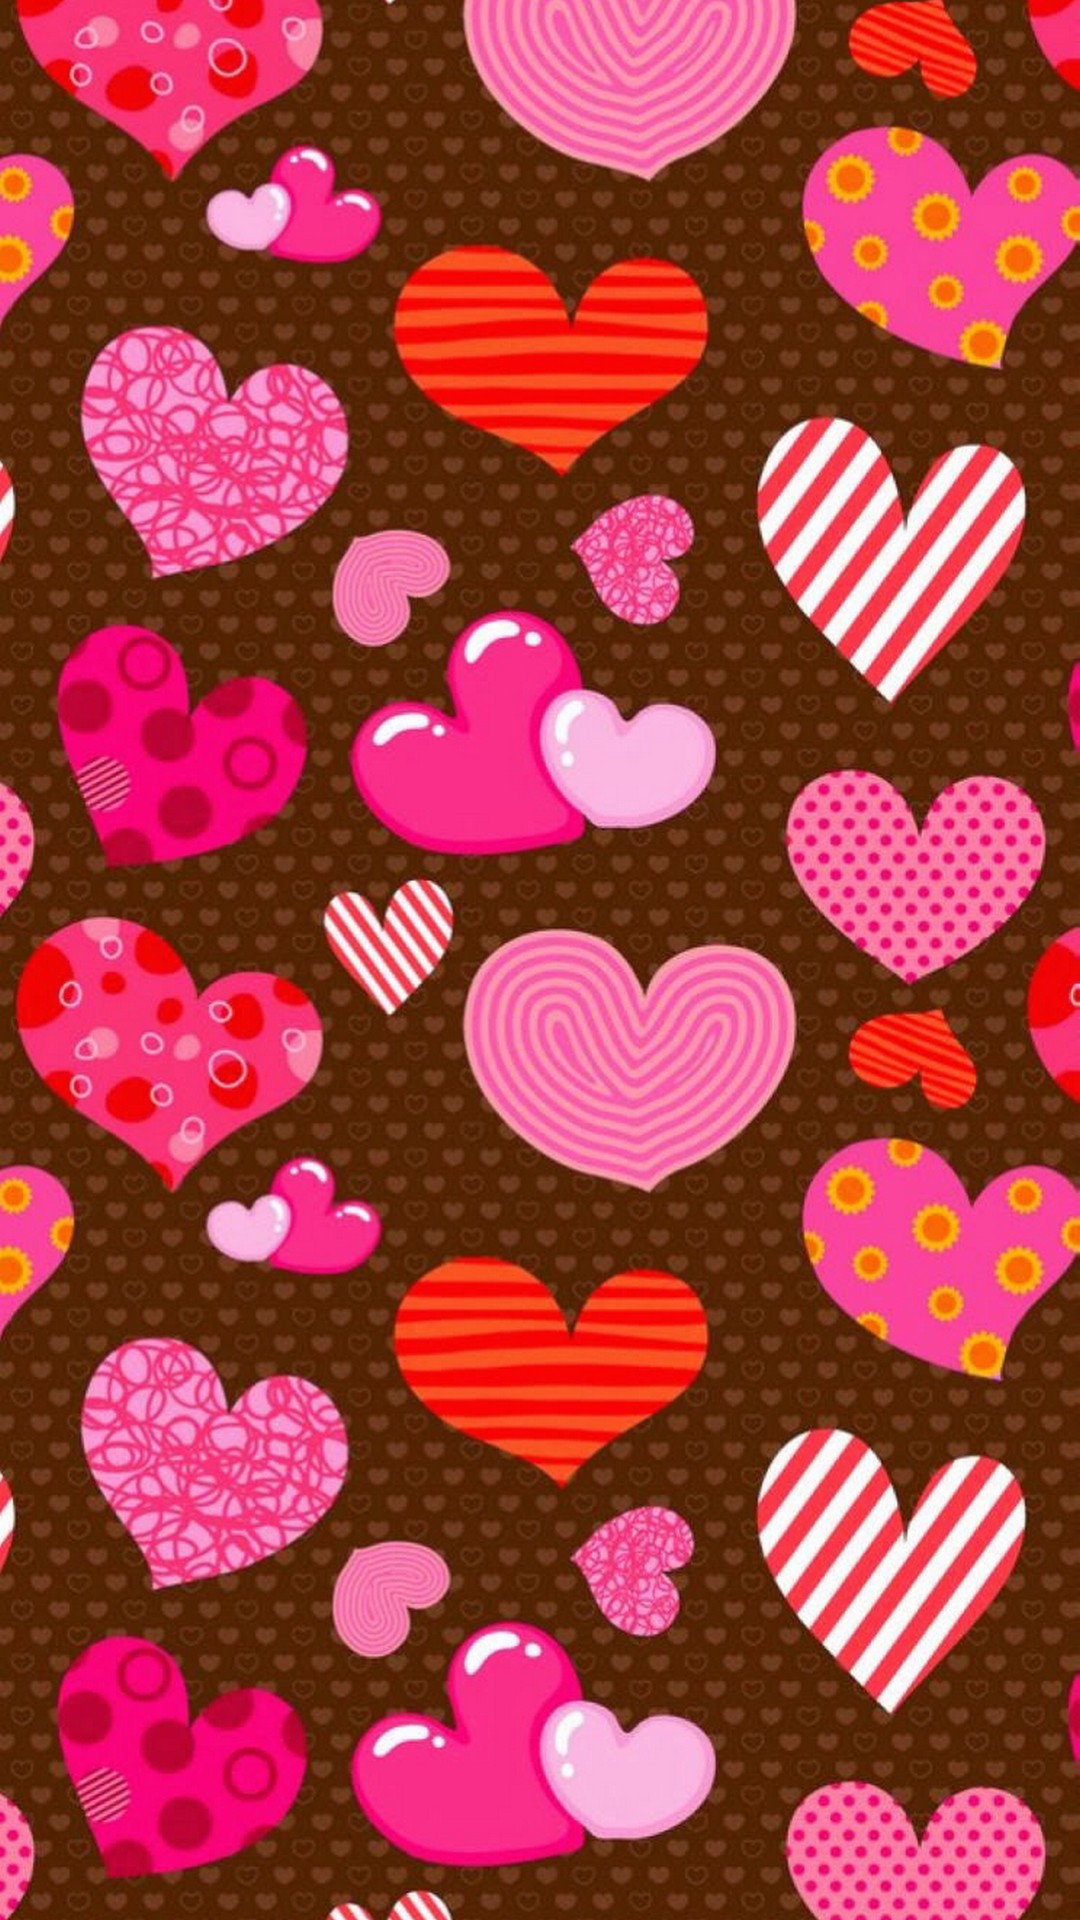 Happy Valentine's Day 2020 Wallpaper